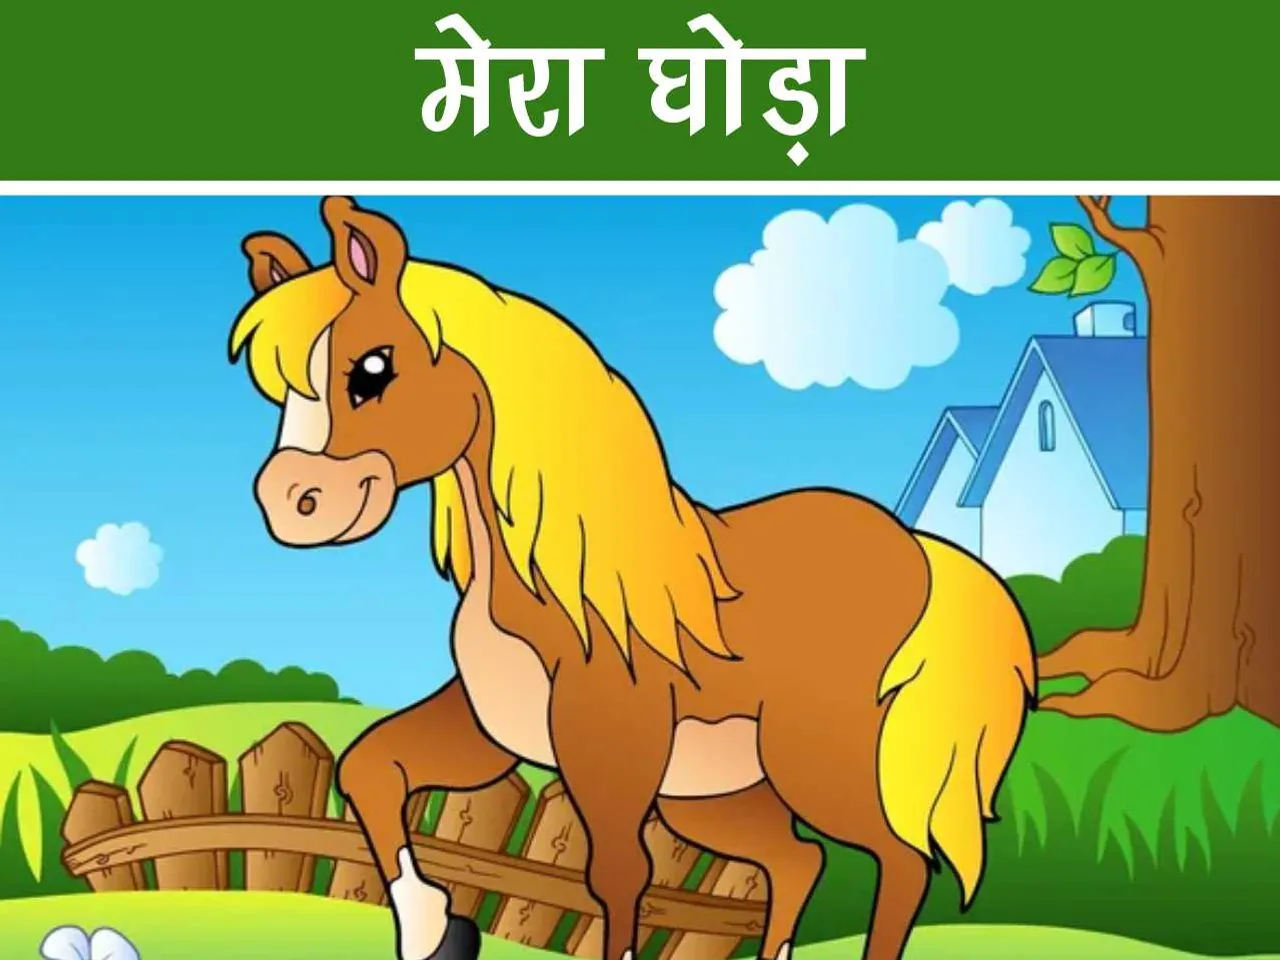 Horse cartoon image